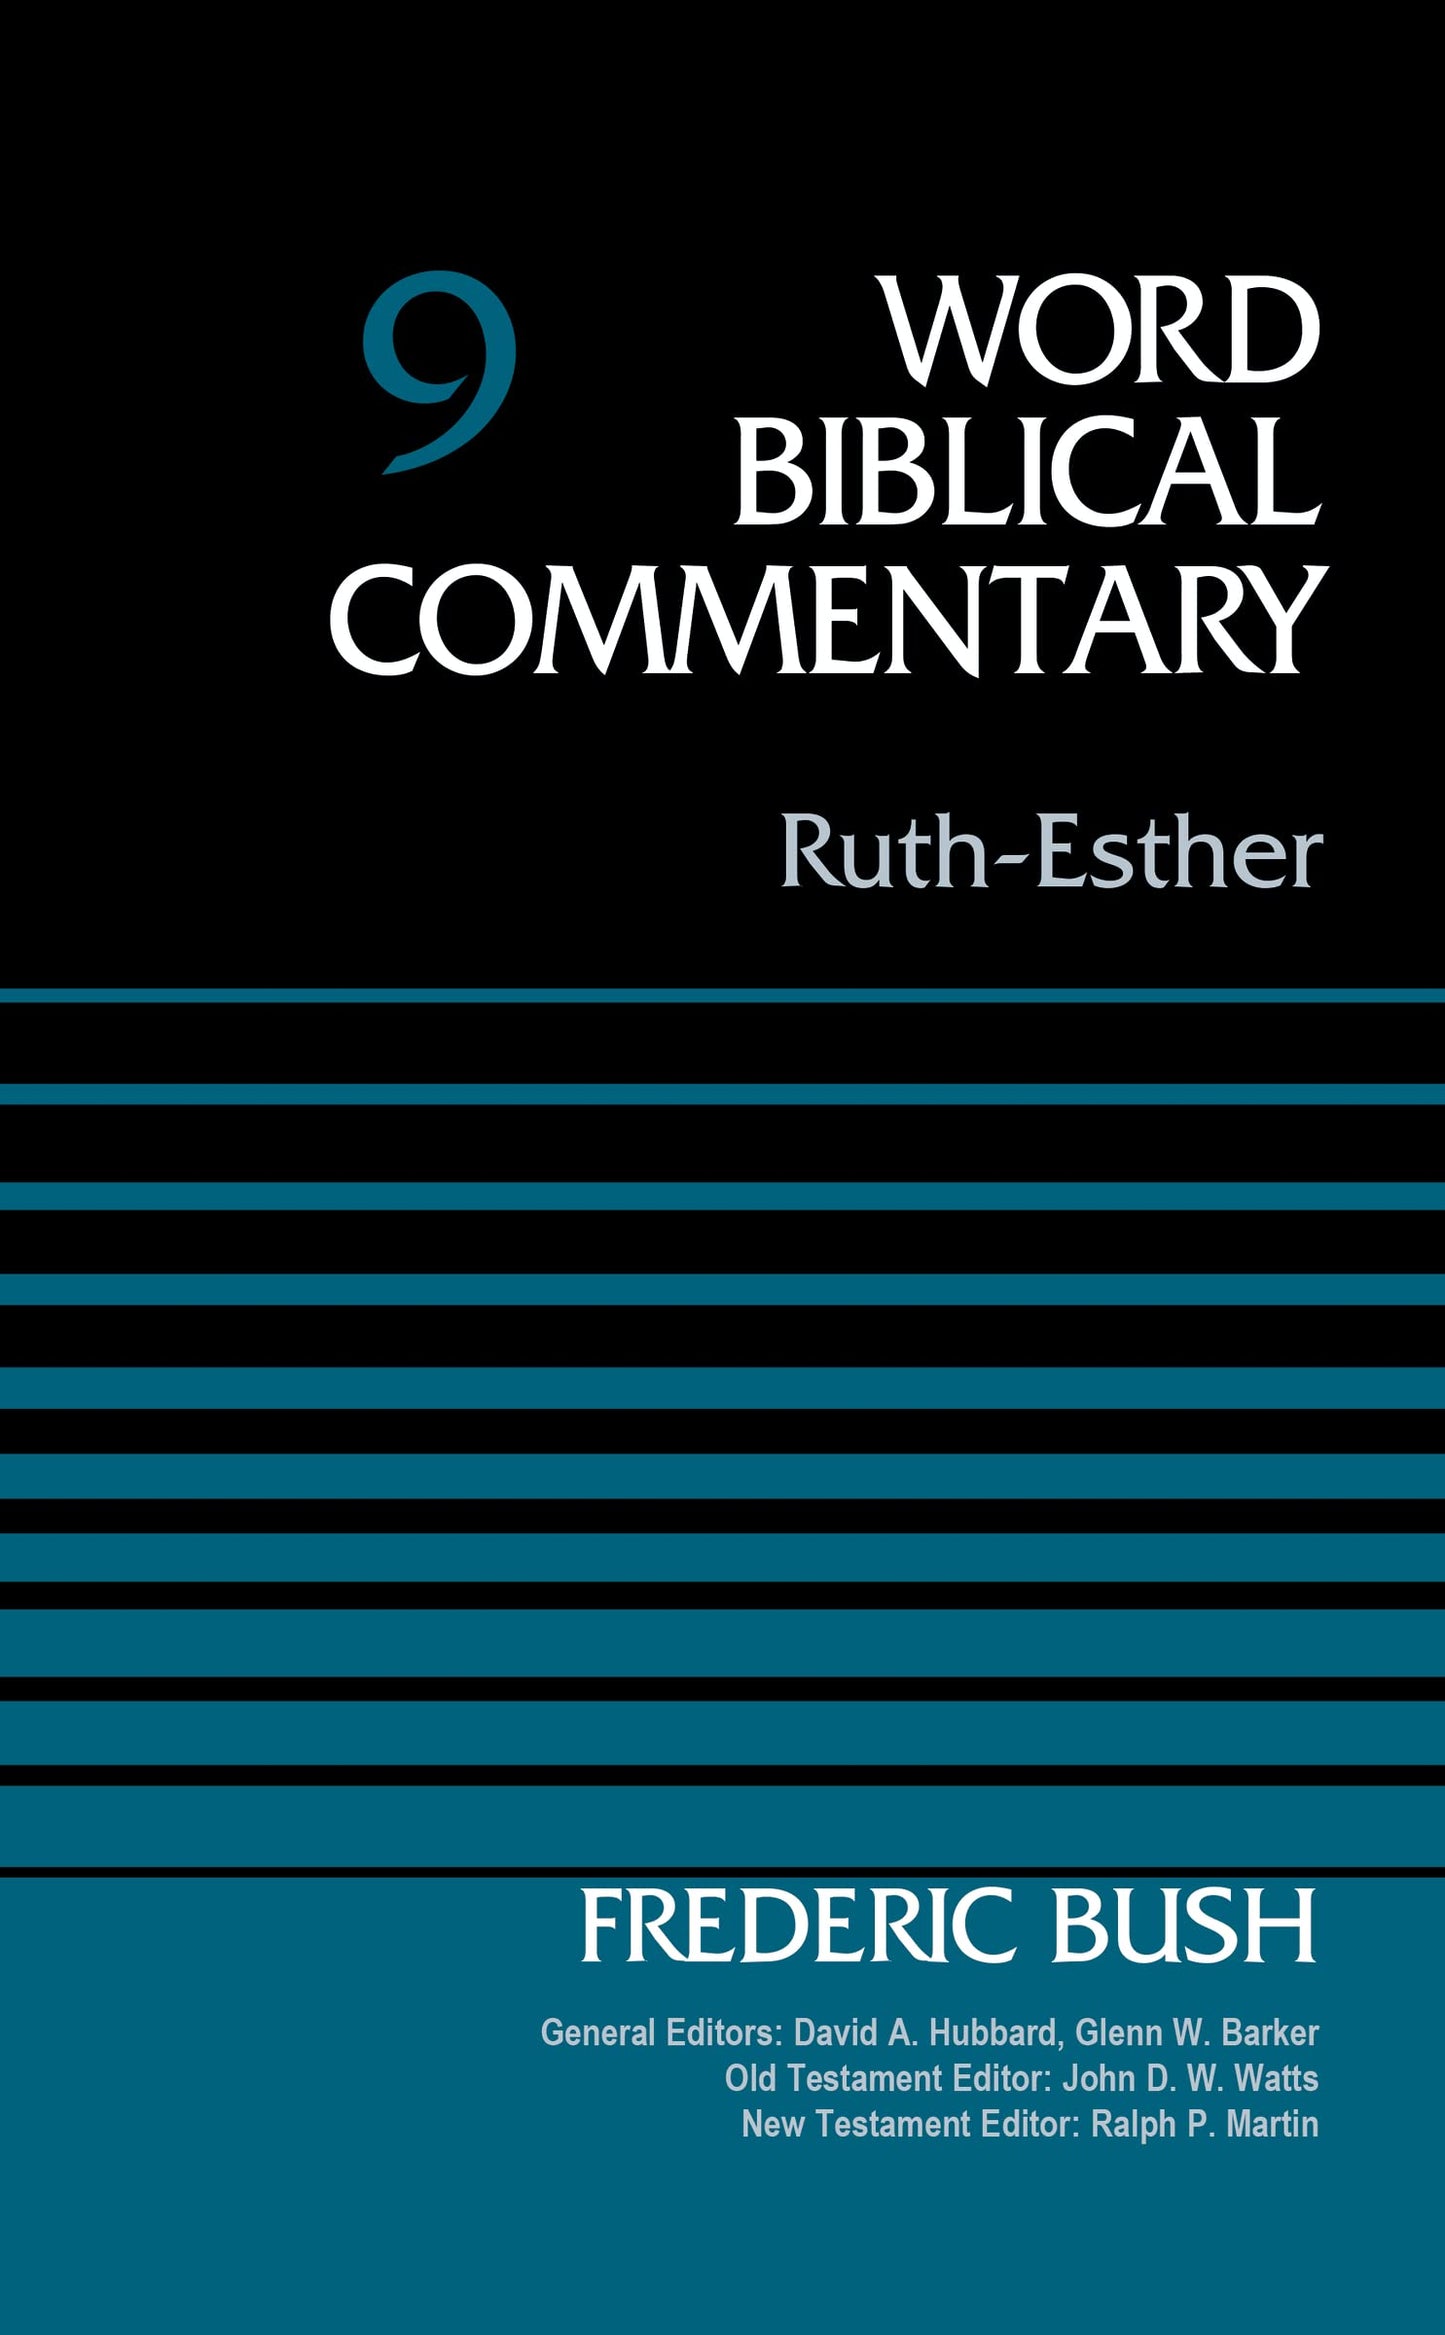 Ruth-Esther, volumen 9 (Bush) (comentario bíblico de Word)